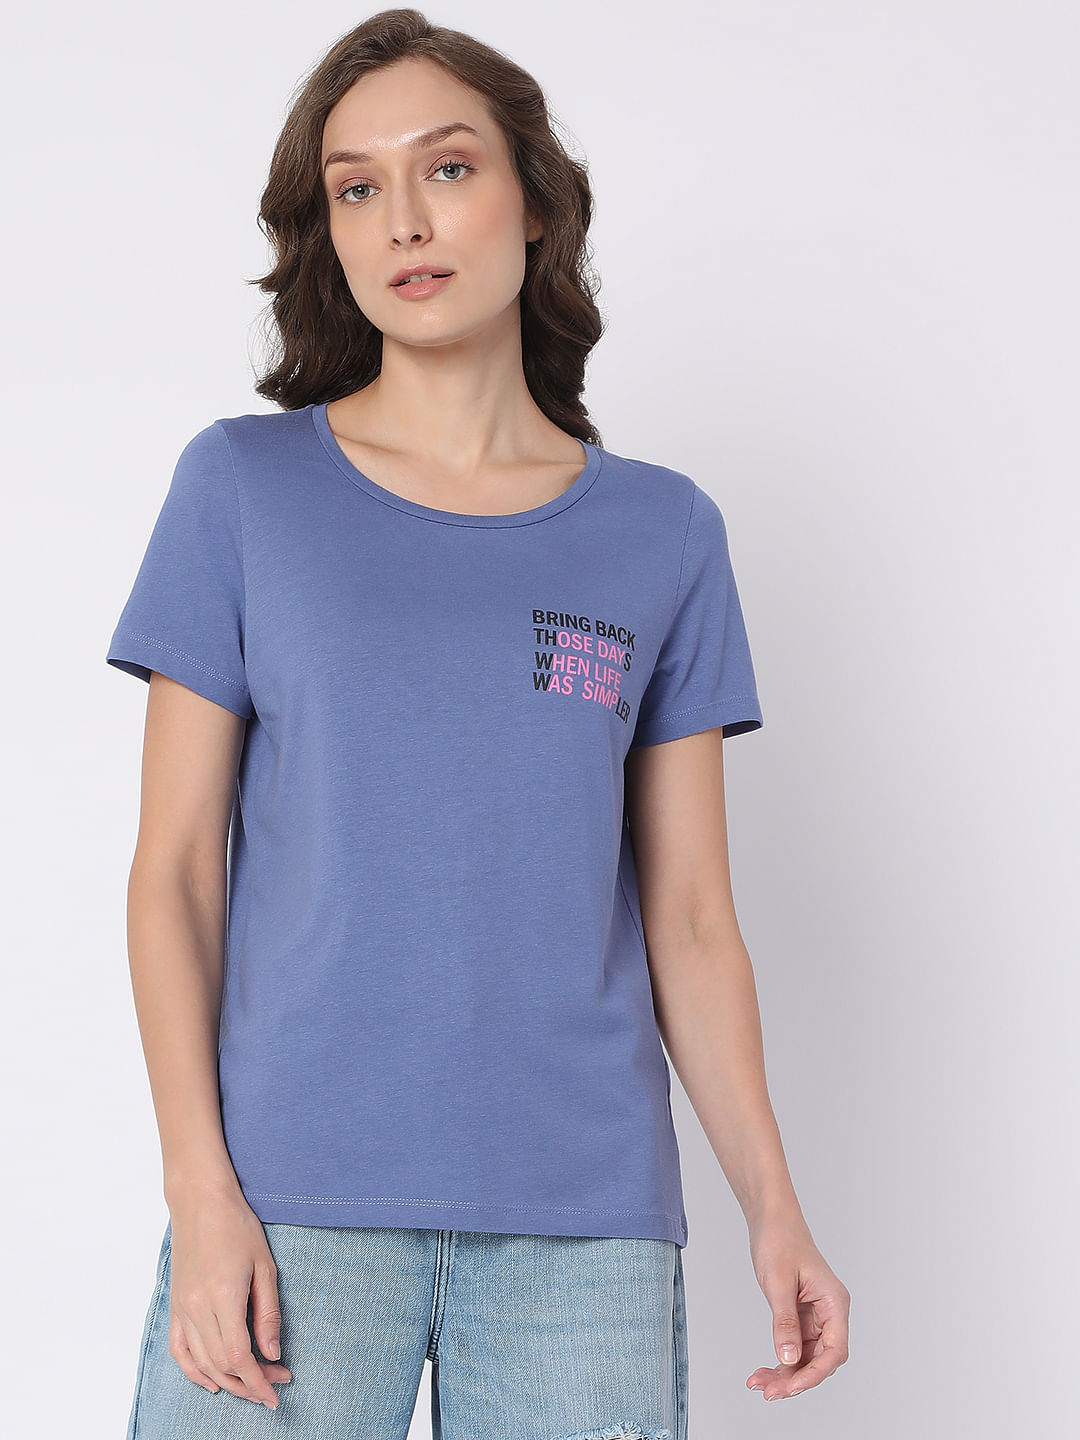 WOMEN FASHION Shirts & T-shirts T-shirt Print discount 67% Pink S Last Girl T-shirt 